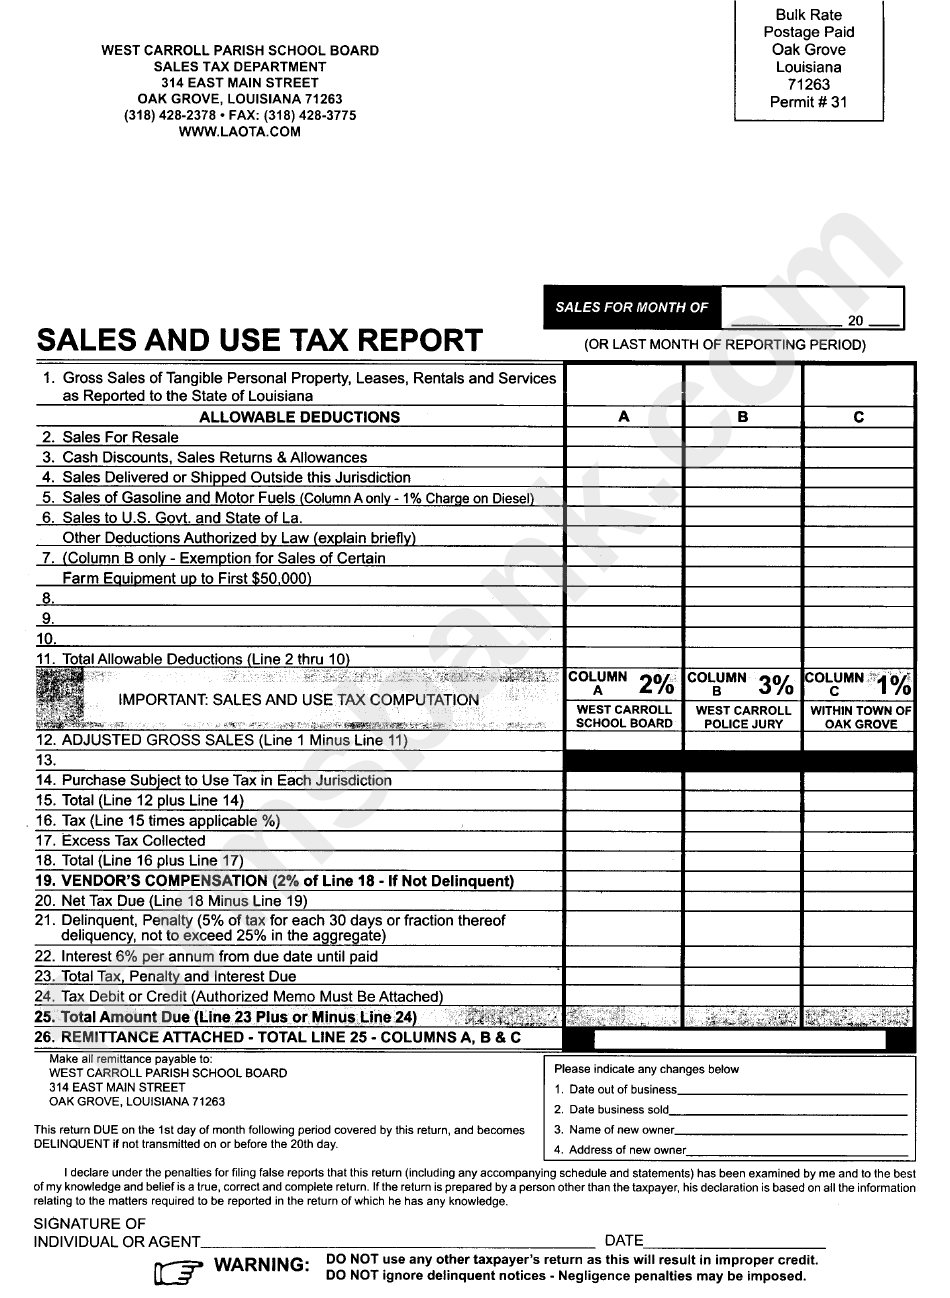 Sales And Use Tax Report Form - West Carroll Parish School Board